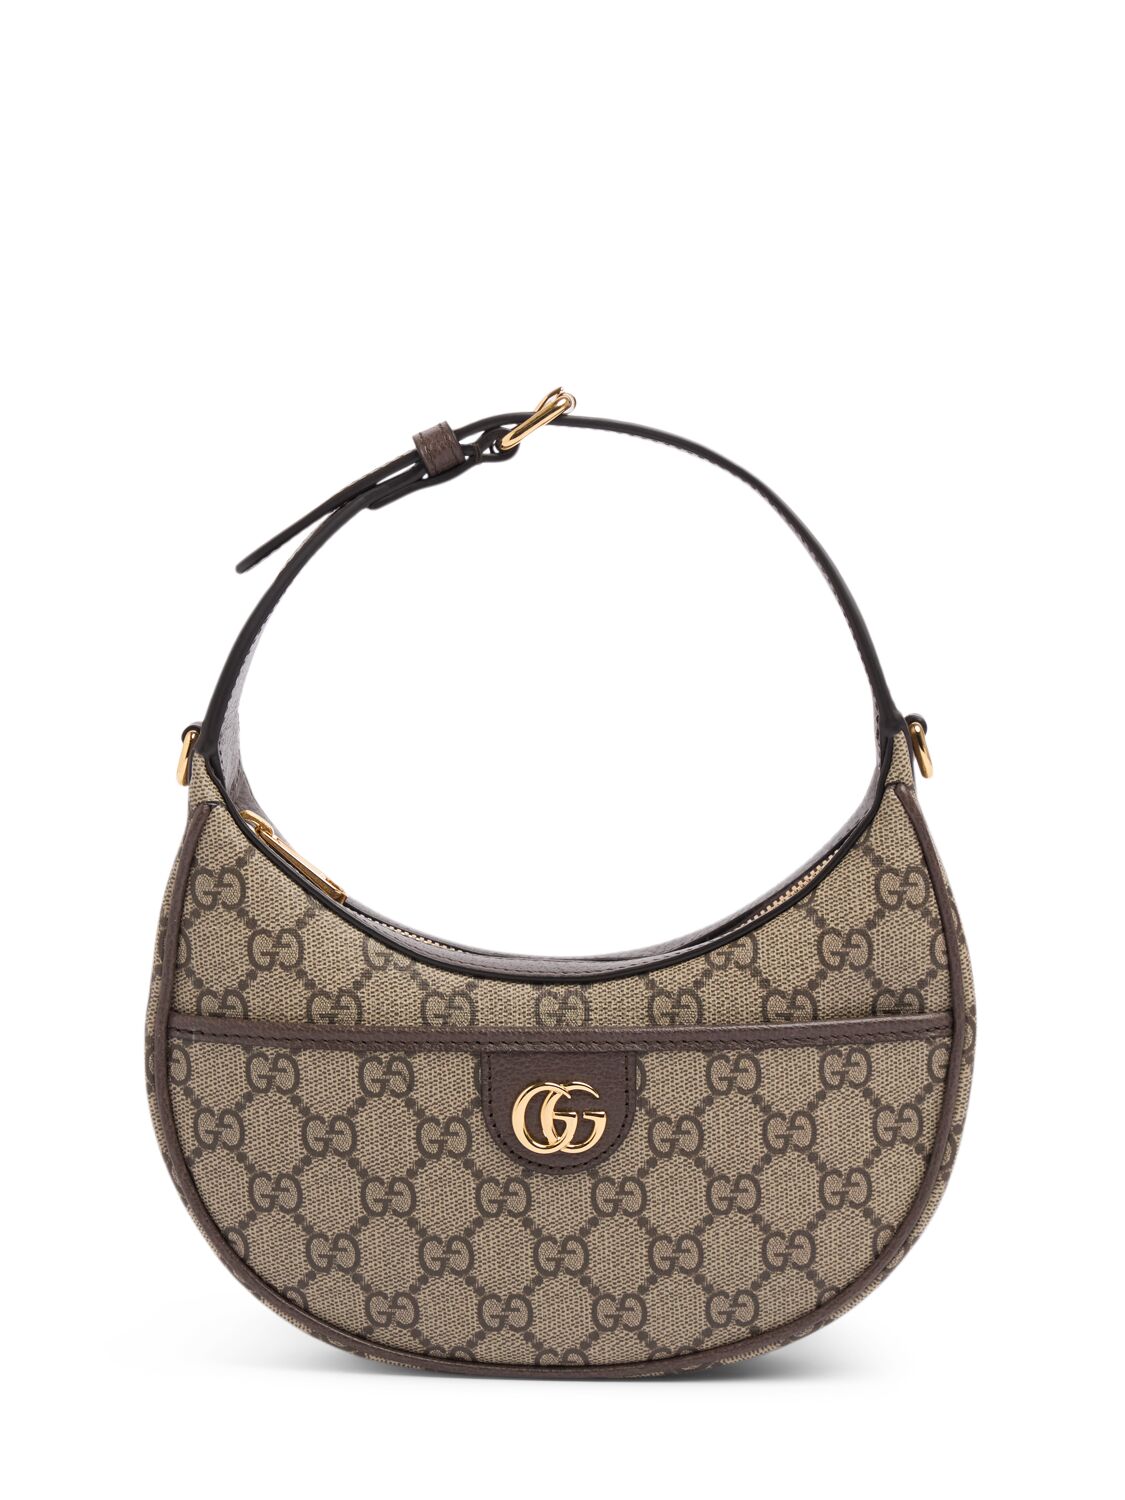 Gucci Ophidia Gg Canvas Shoulder Bag In Ebony